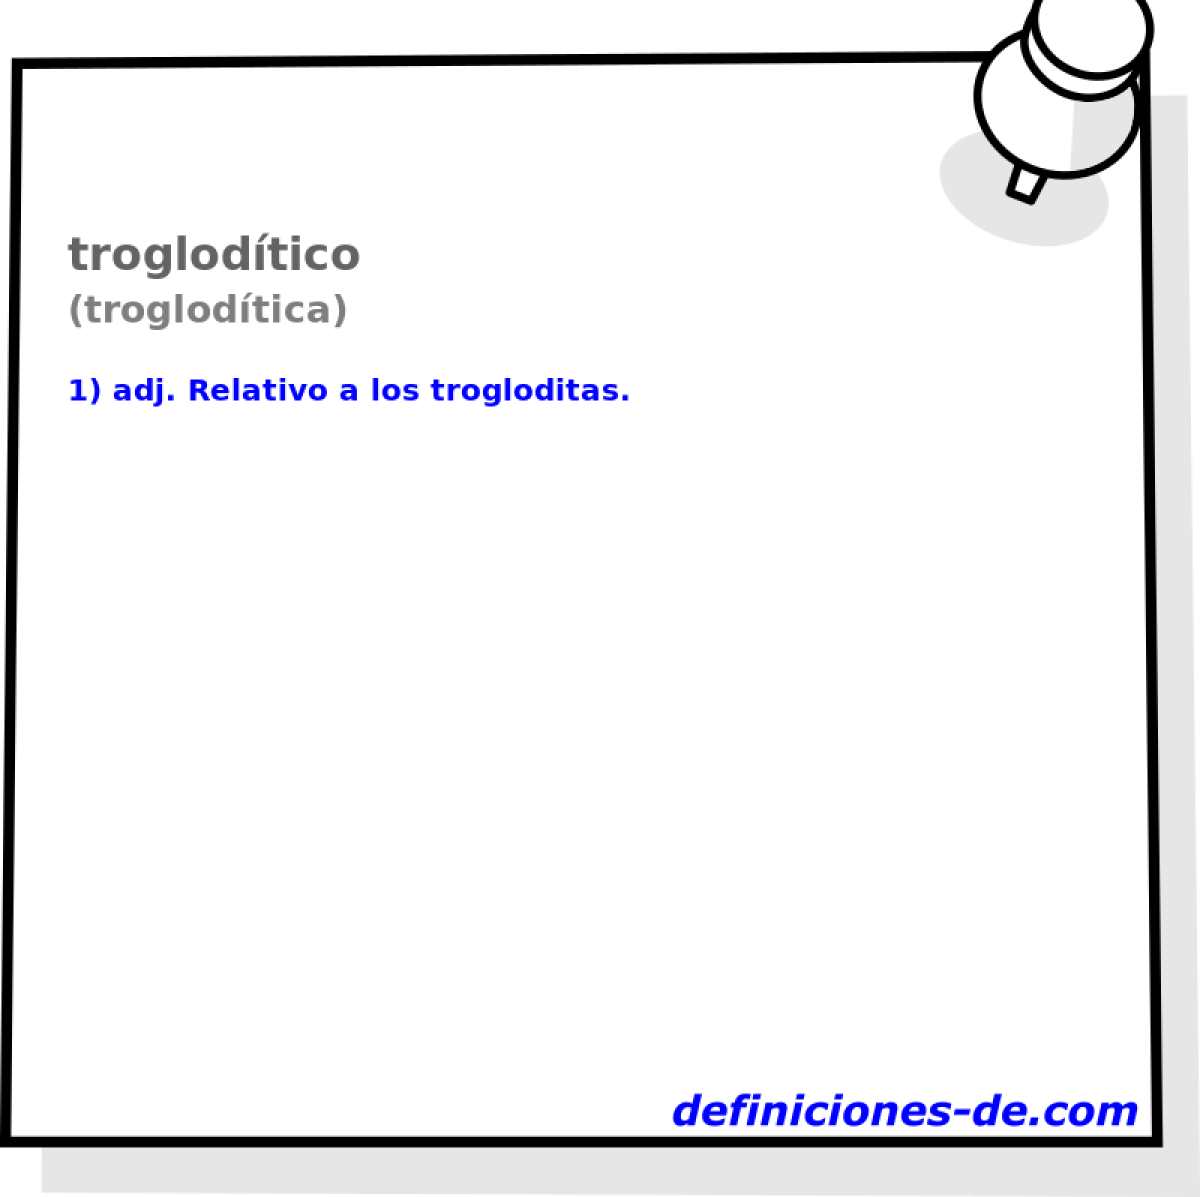 troglodtico (troglodtica)